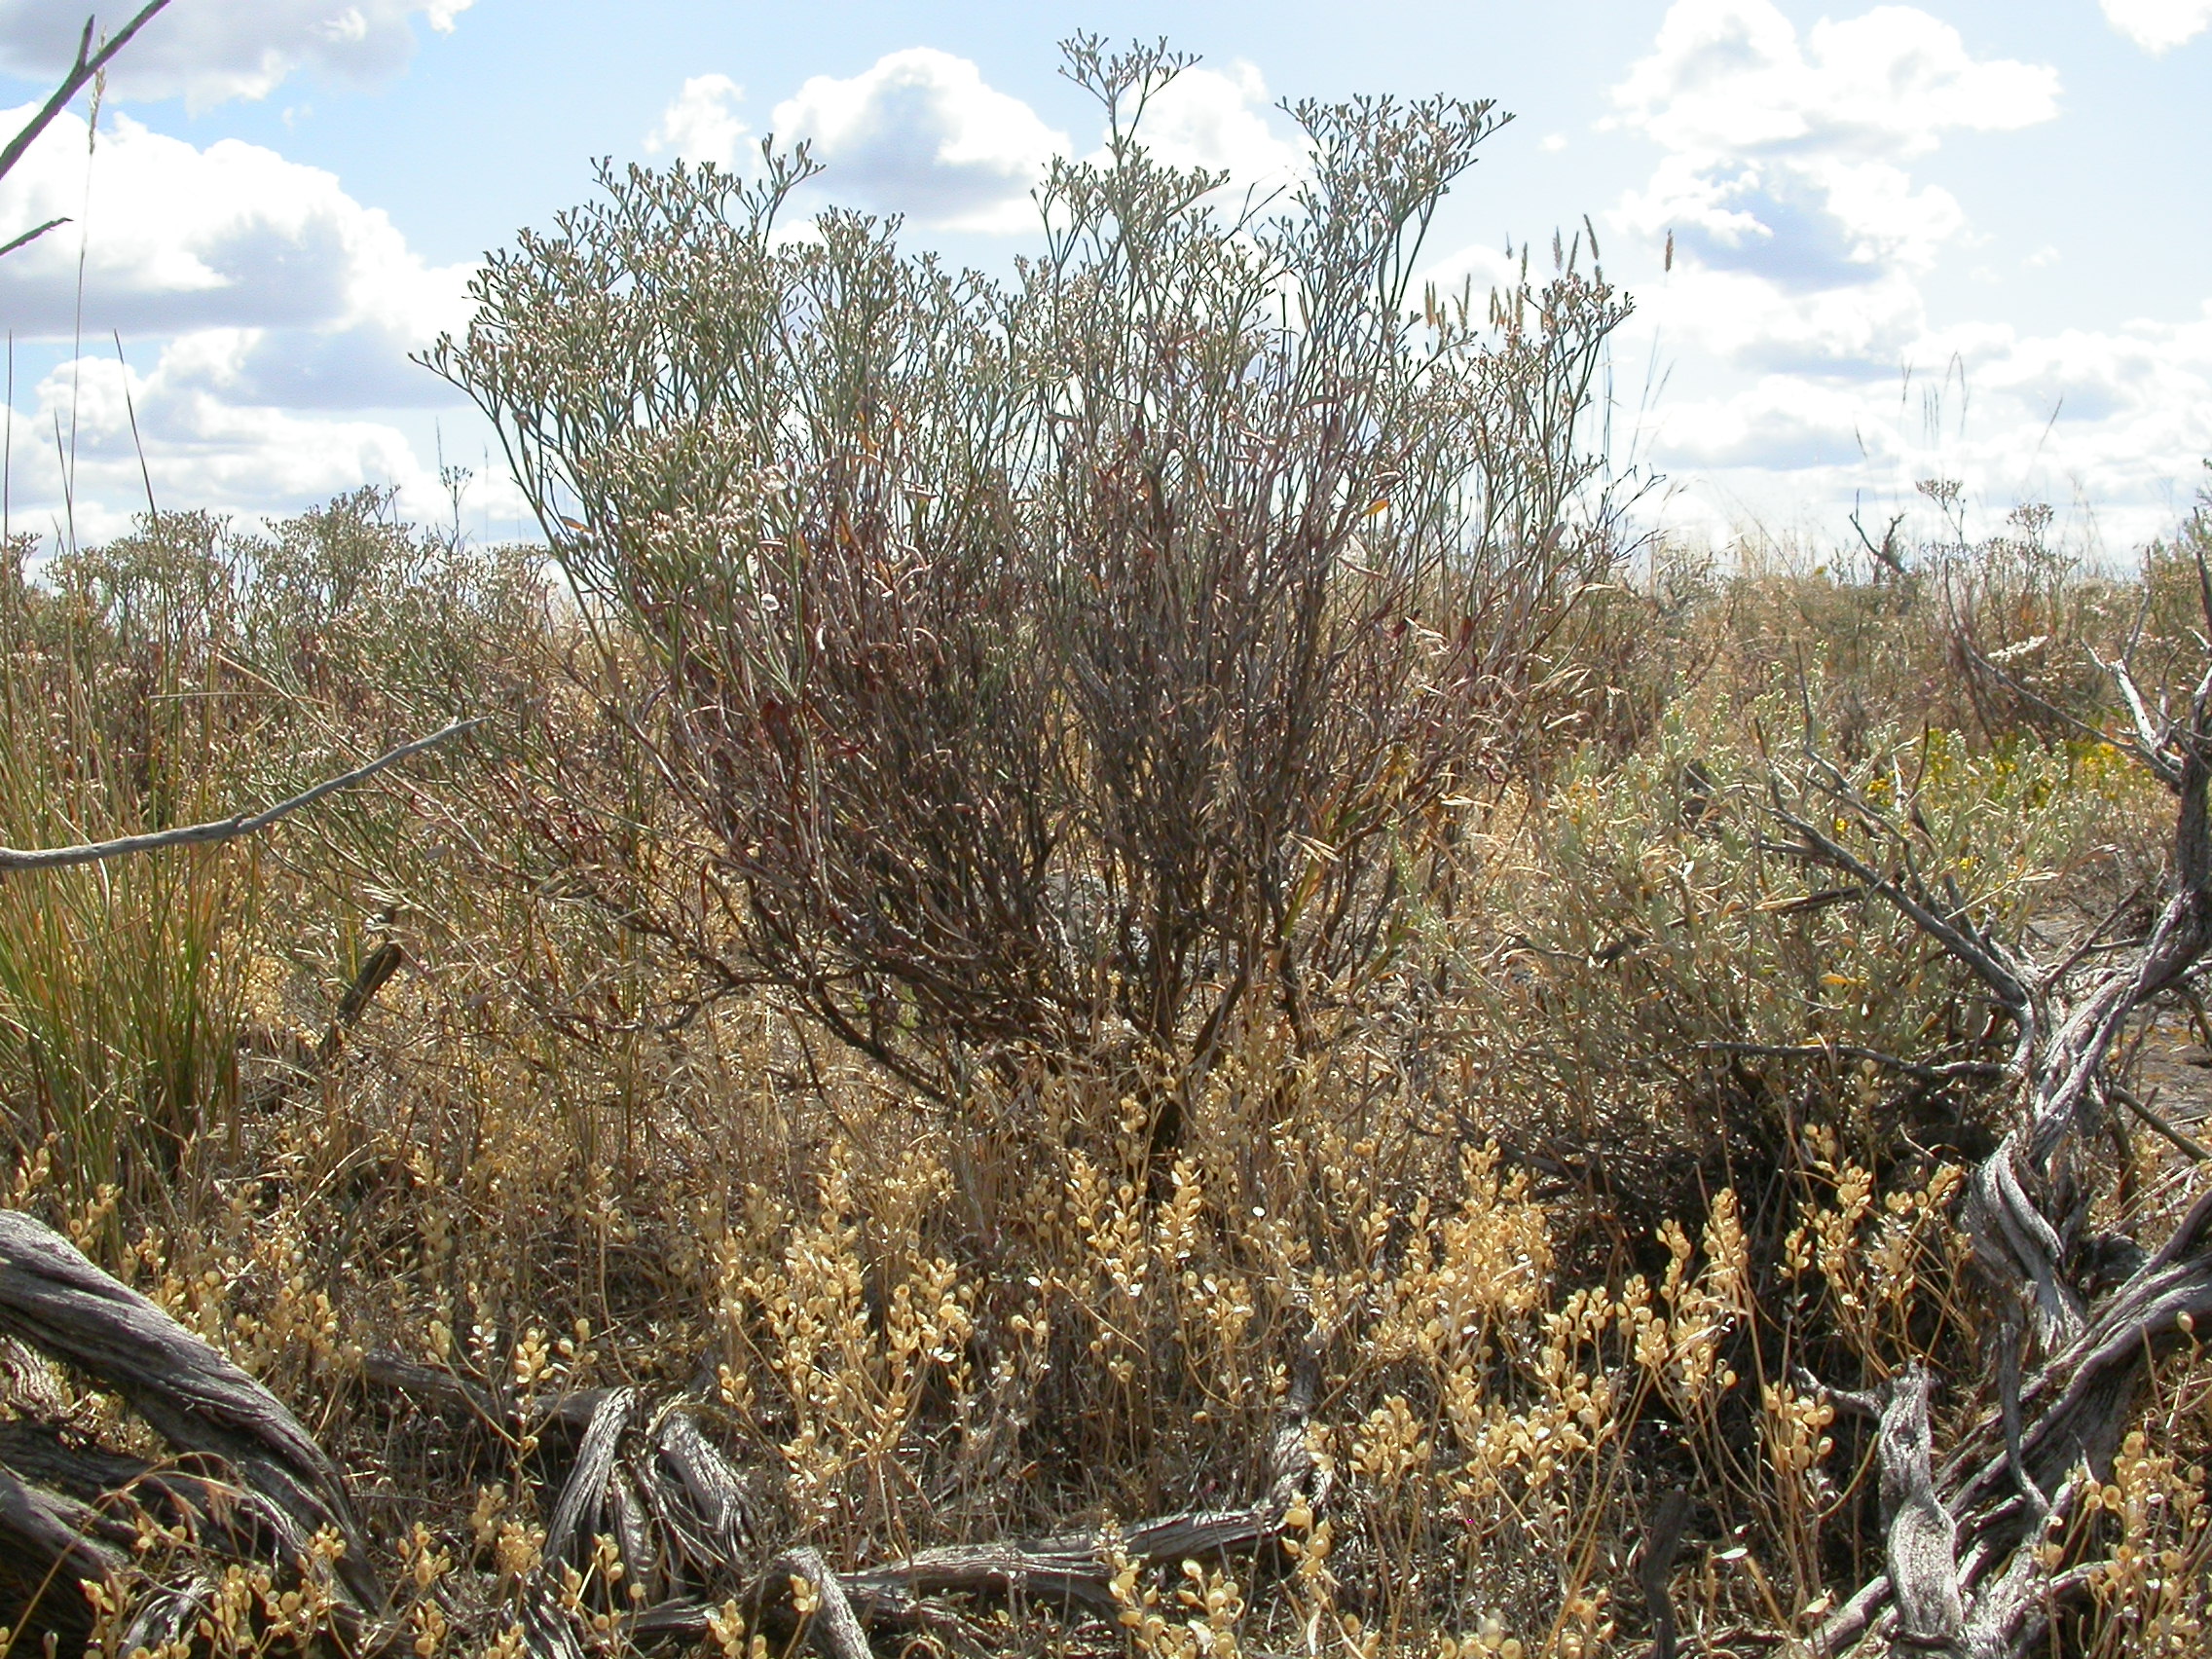 Growth habit of Eriogonum microthecum, slender buckwheat in brushland habitat